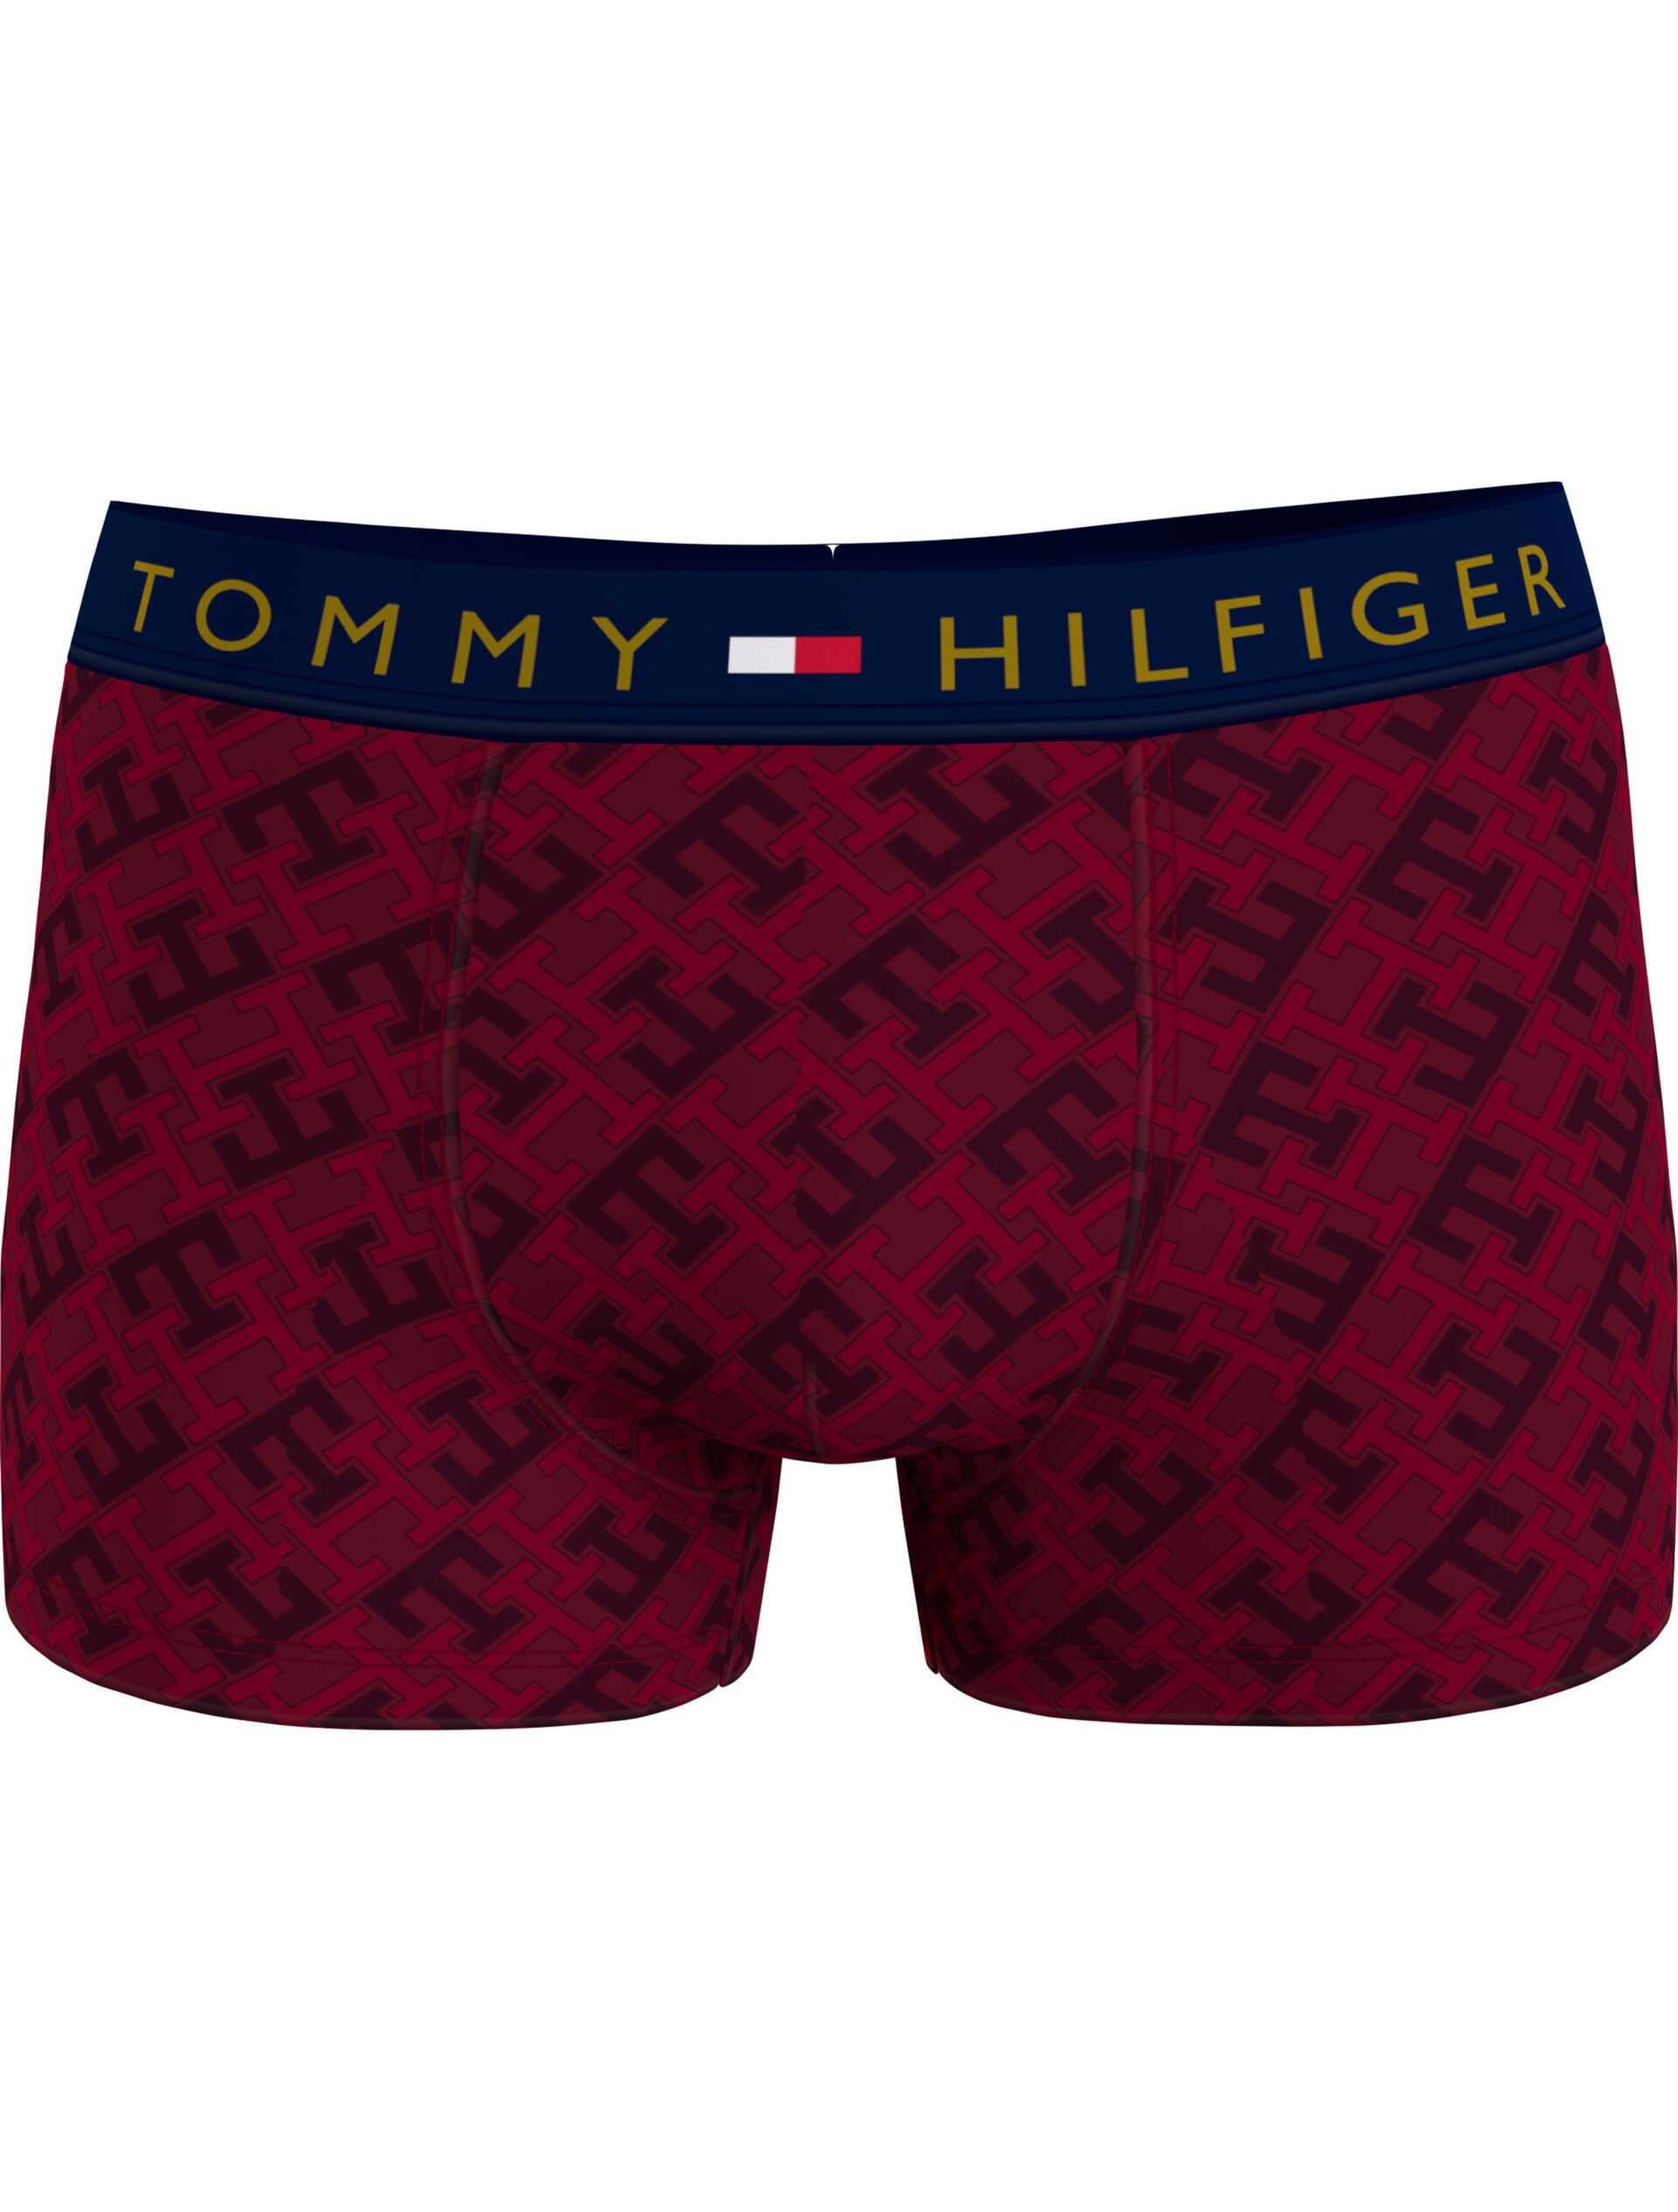 Tommy Hilfiger  Tights 90-900838